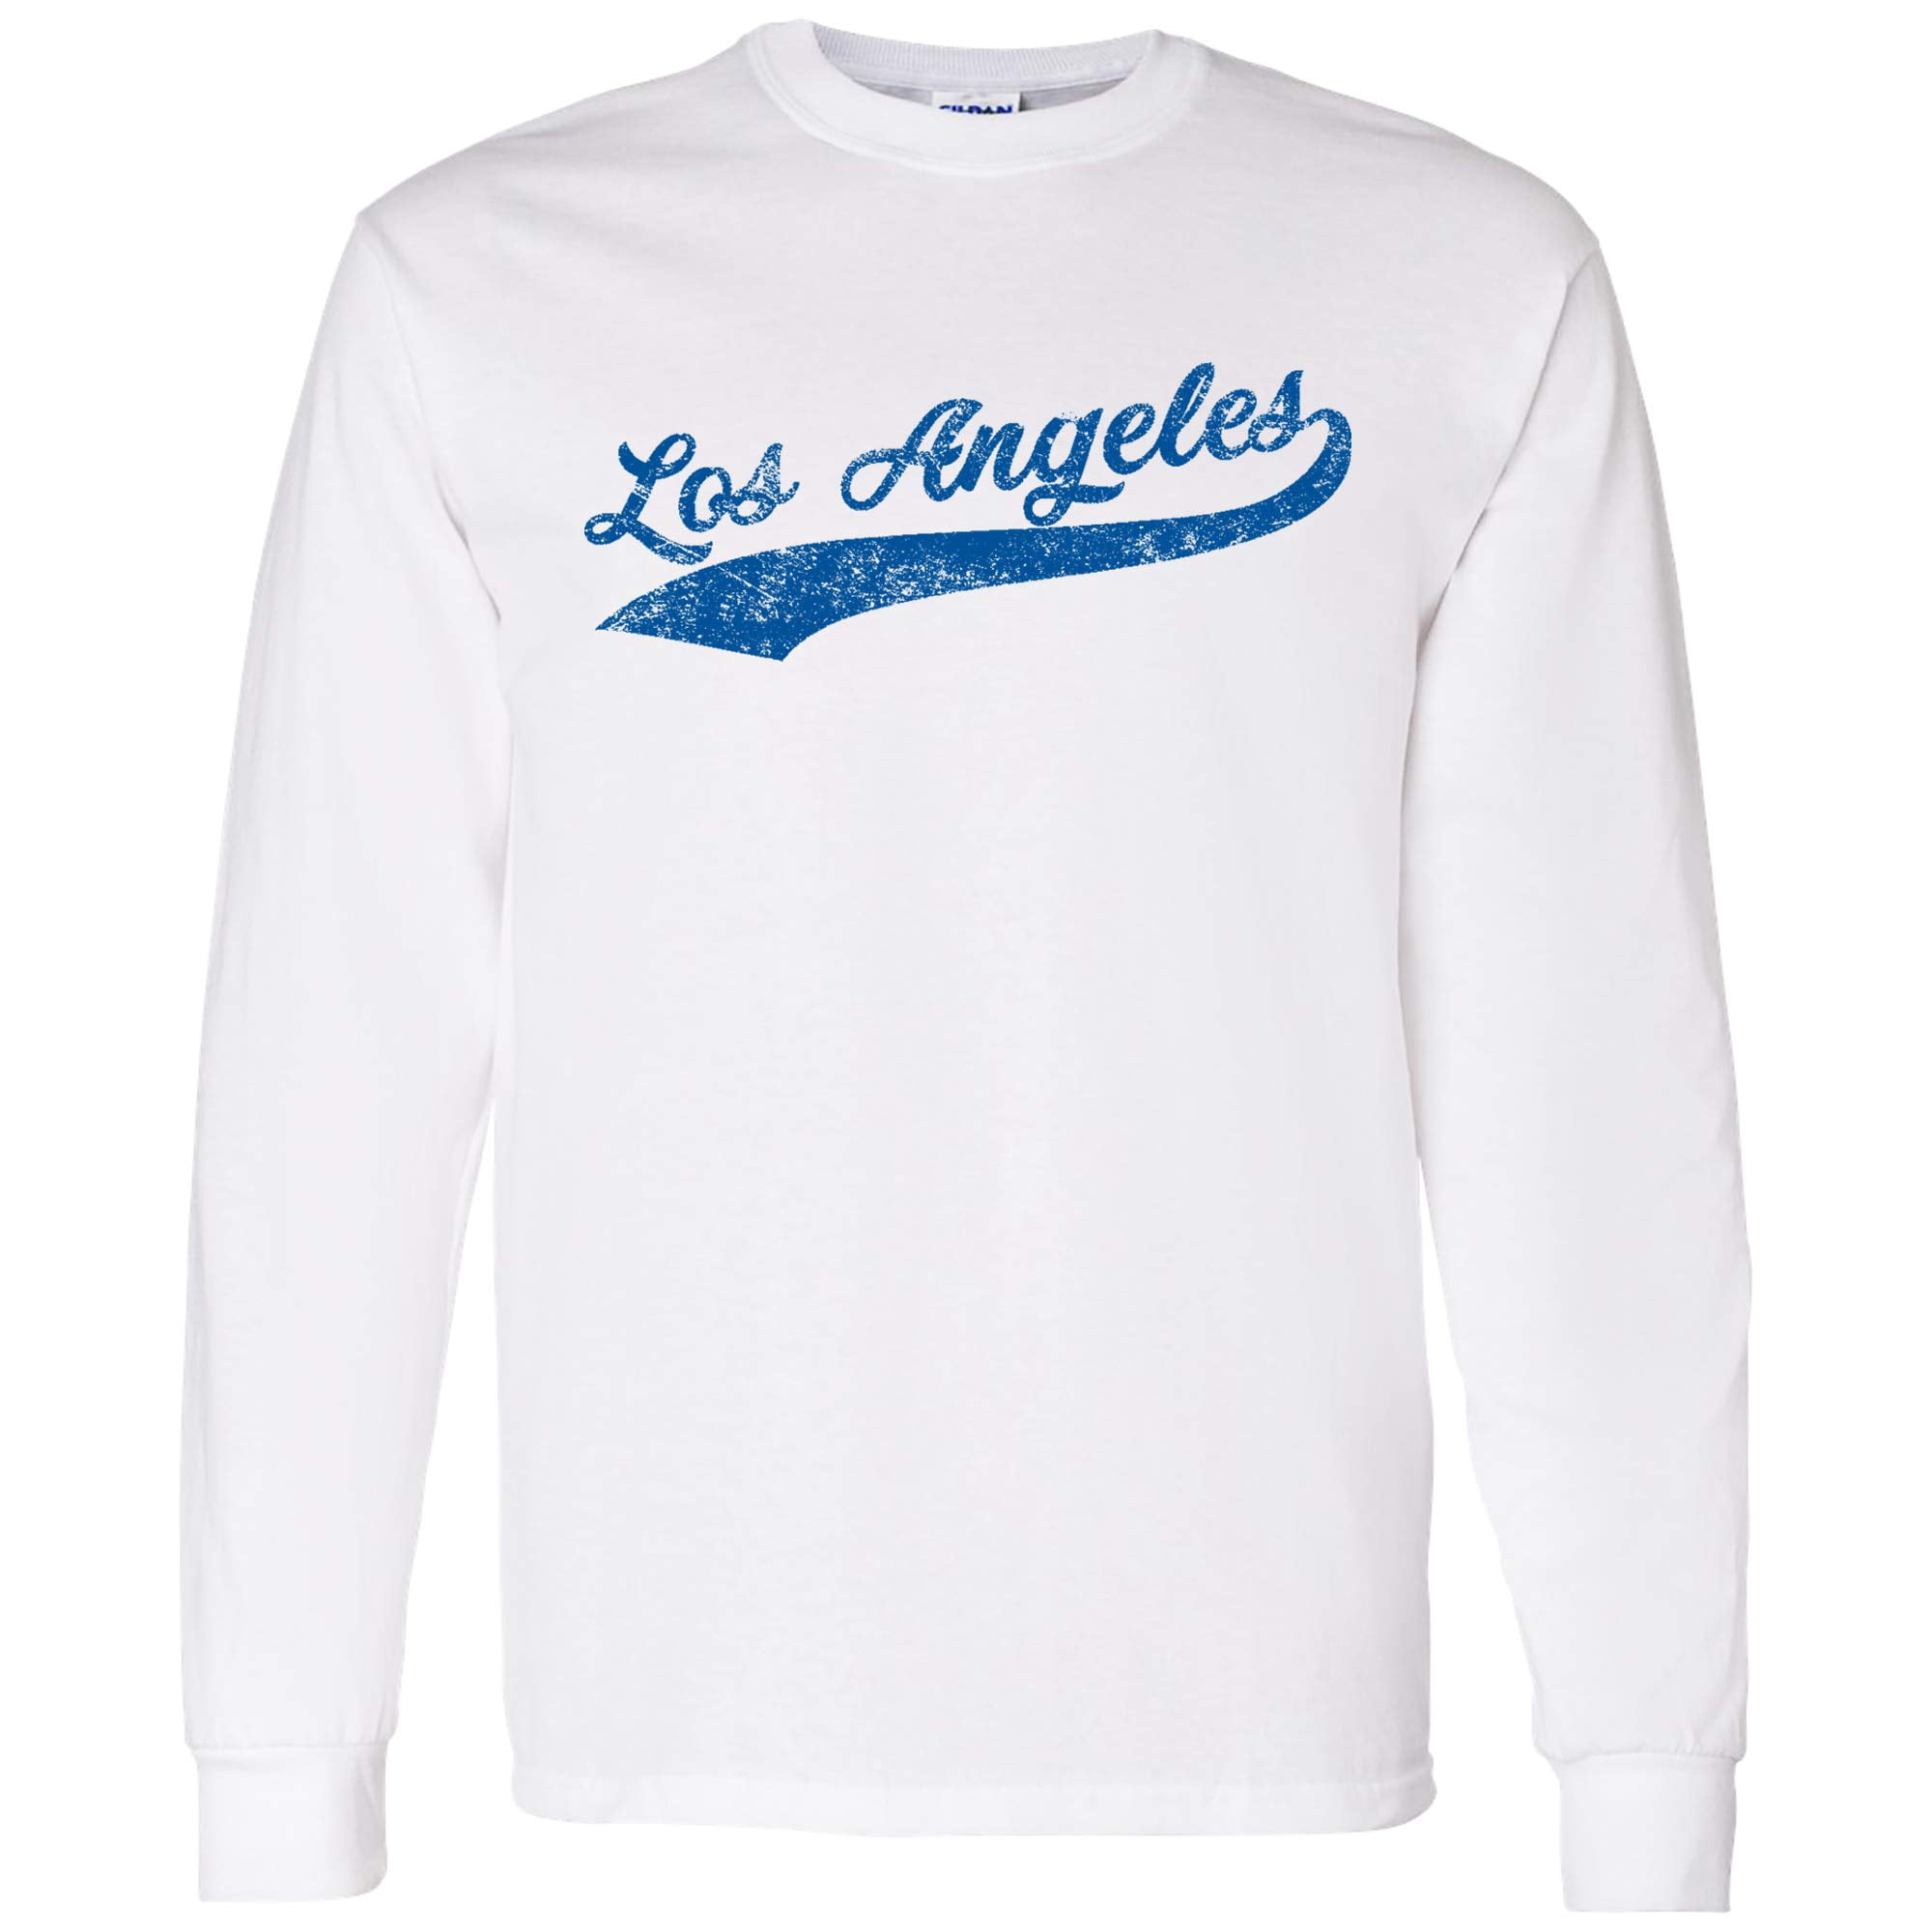 UGP Campus Apparel Los Angeles Baseball Script - Hometown Pride, Pitcher Long Sleeve T Shirt - 2X-Large - White/Blue, Men's, Size: 2XL